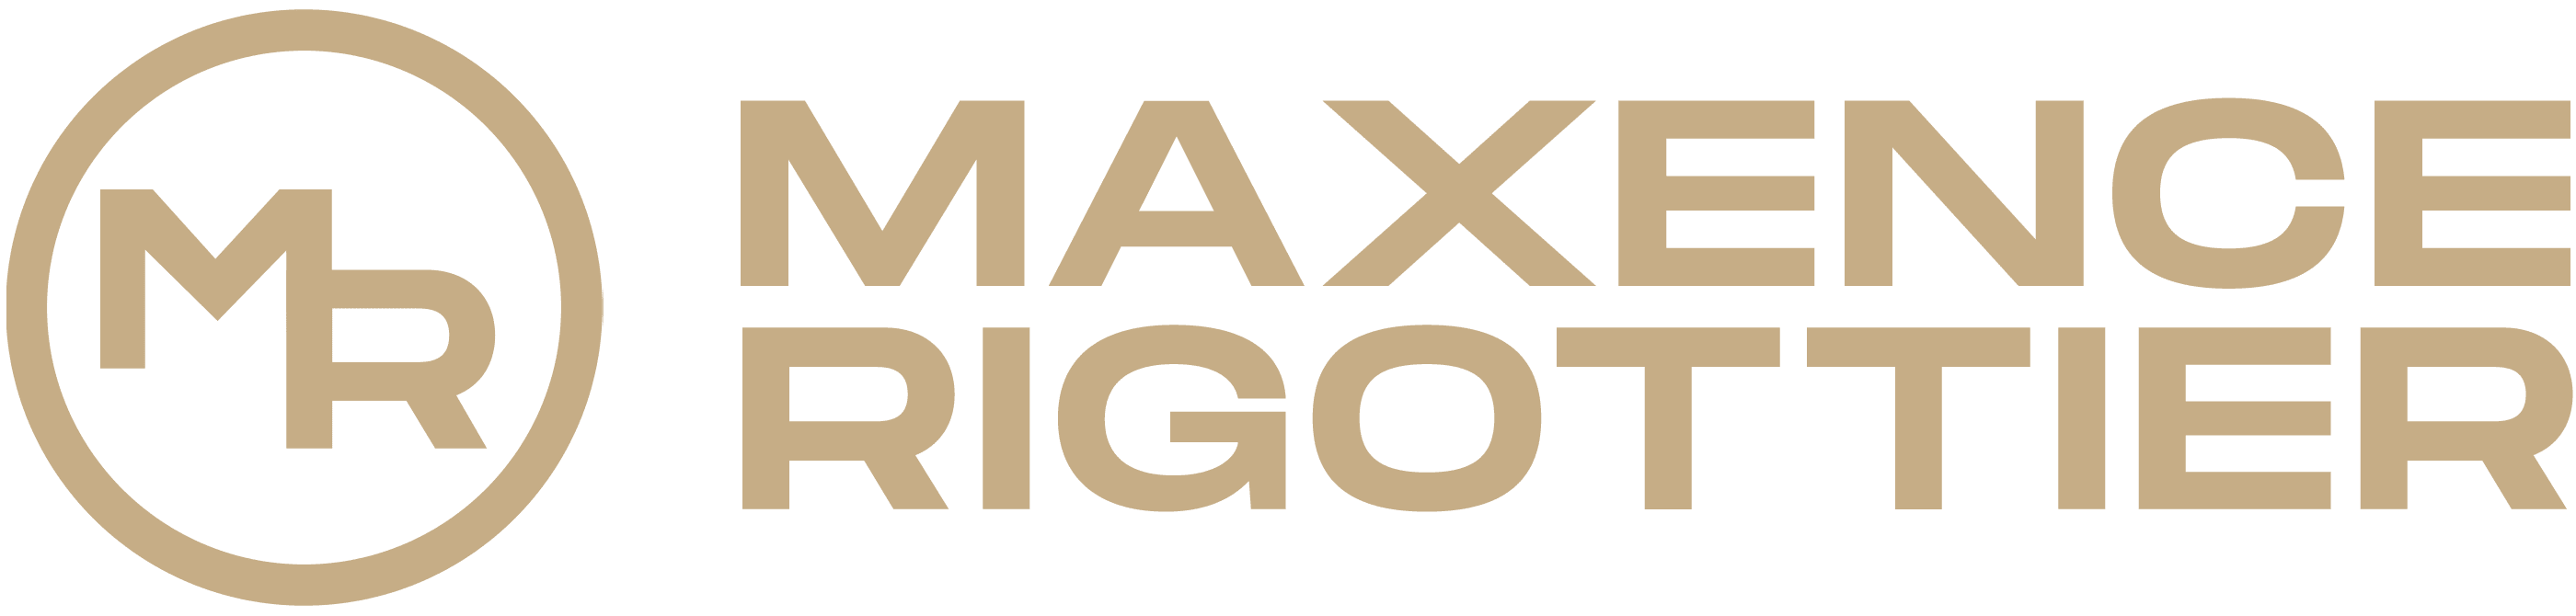 logo-maxence-rigottier-laurence-gonzalez